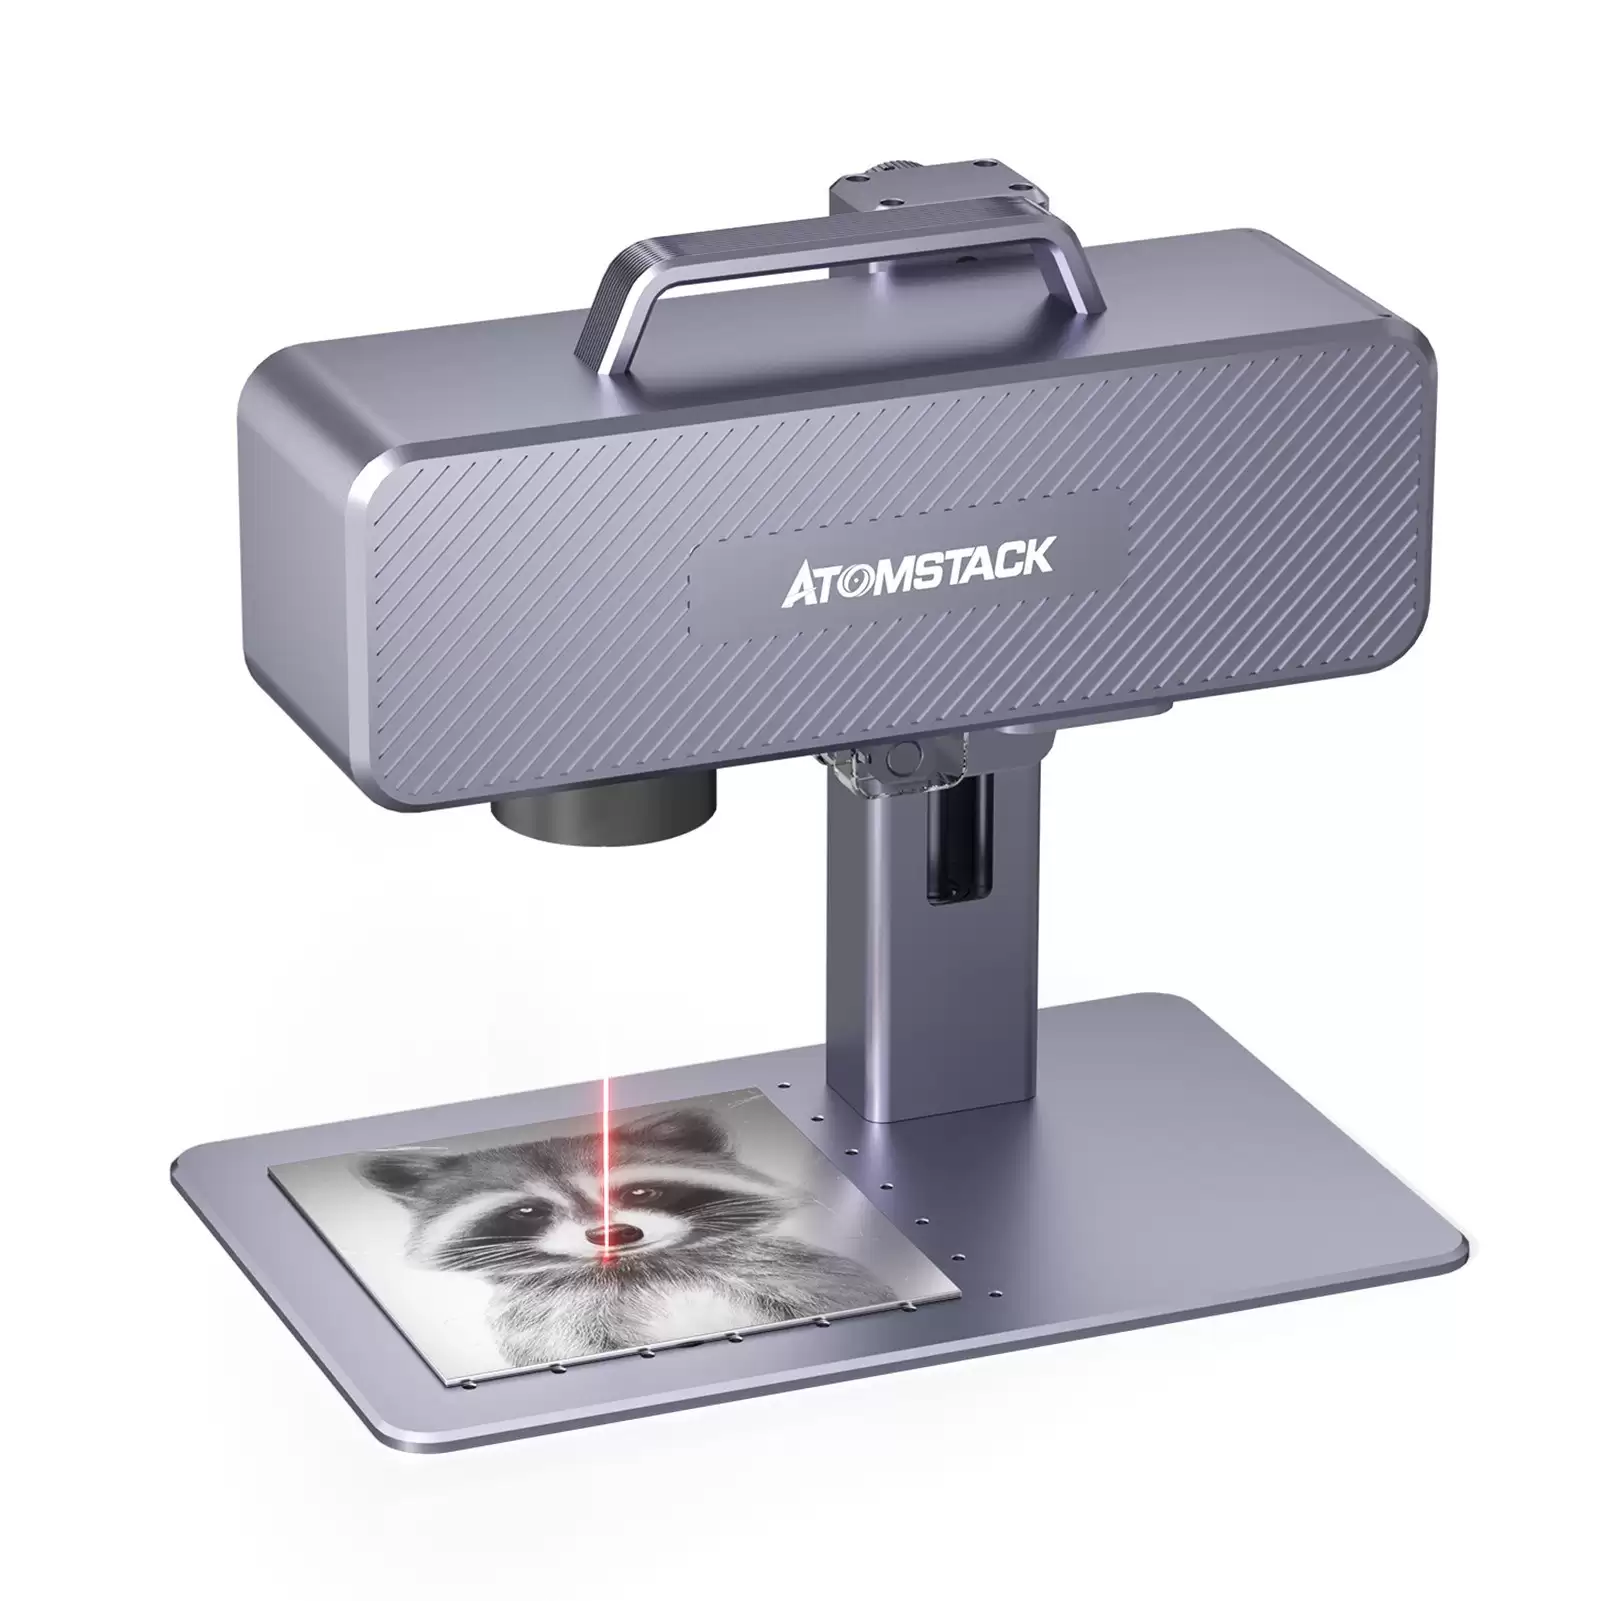 ATOMSTACK S10 Pro 10W Laser Engraver Cutter, 50W Machine Power